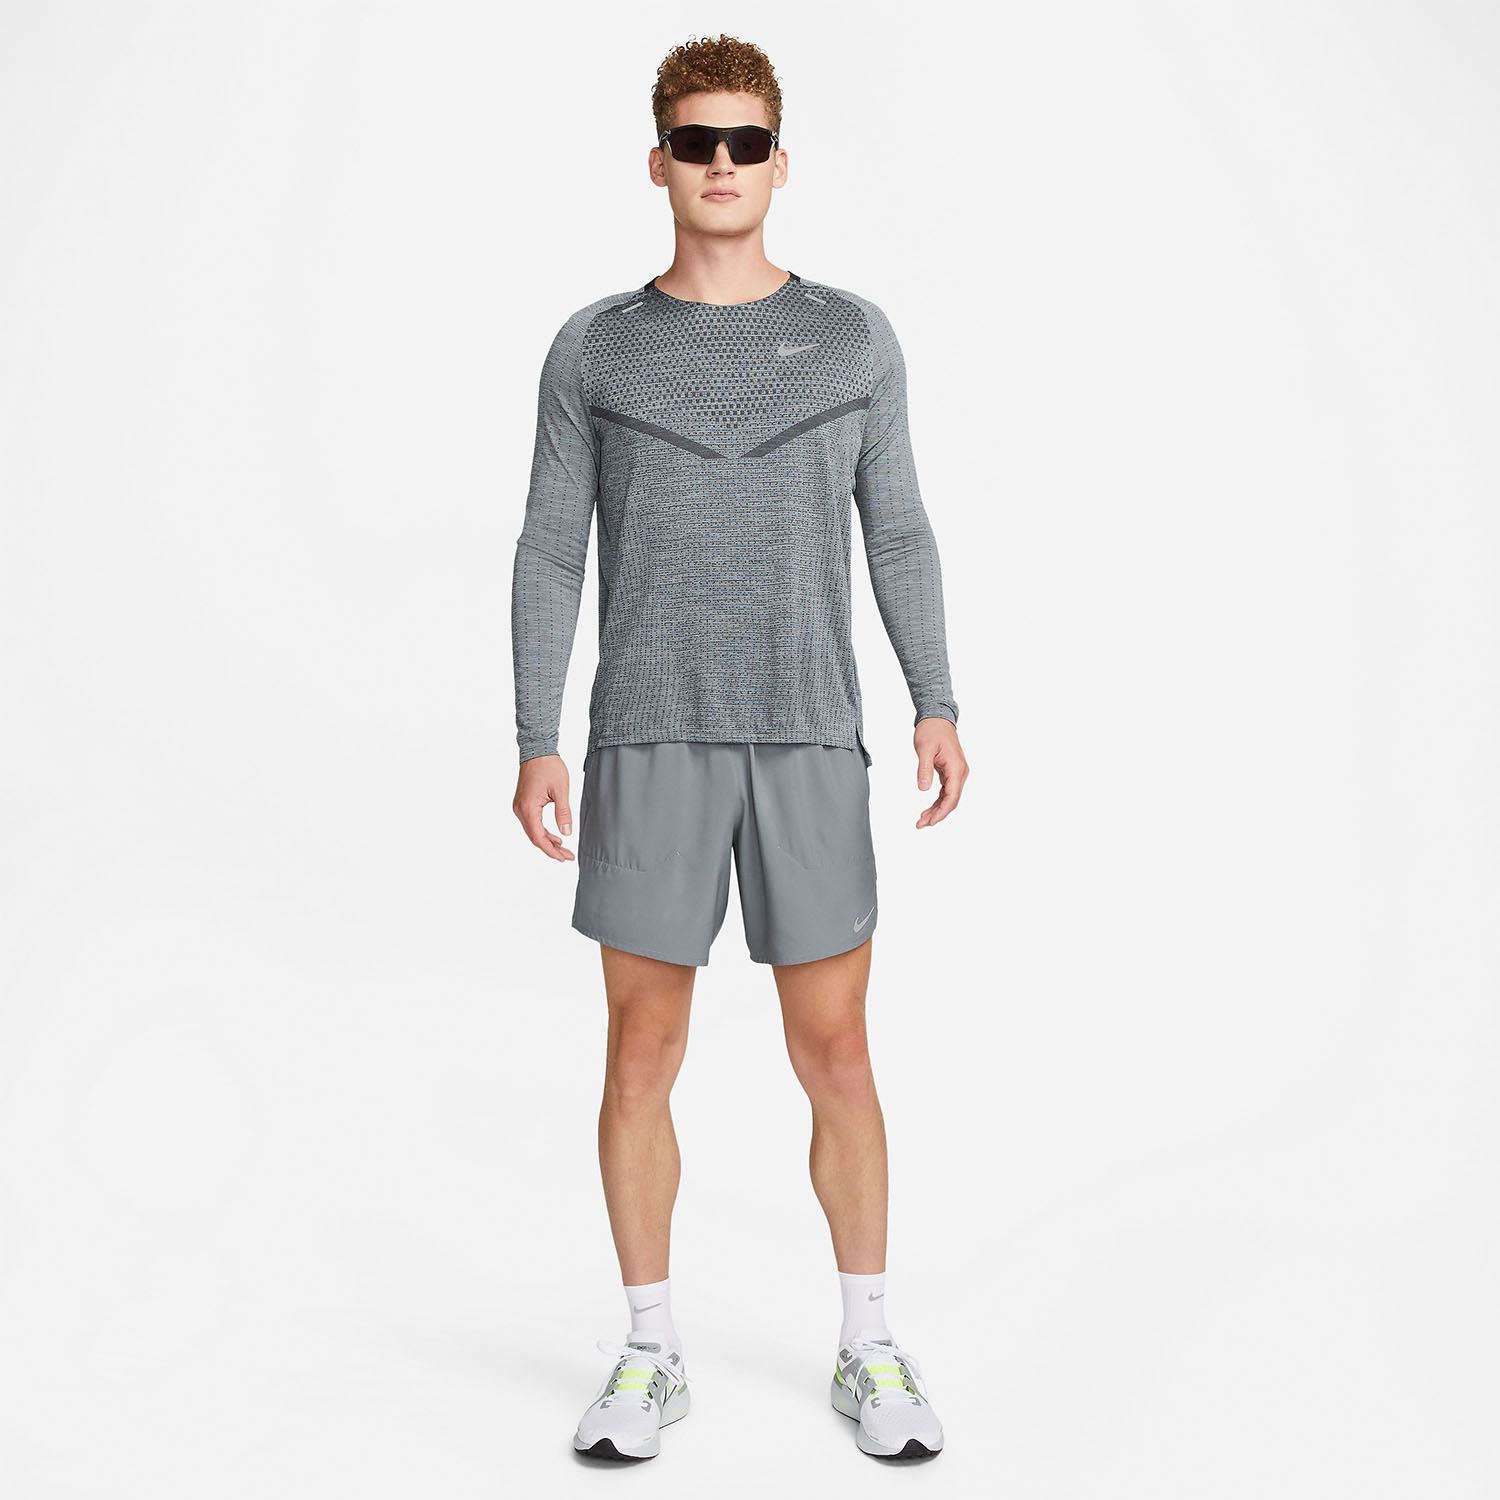 Nike TechKnit Ultra Logo Men's Running Shirt - Black